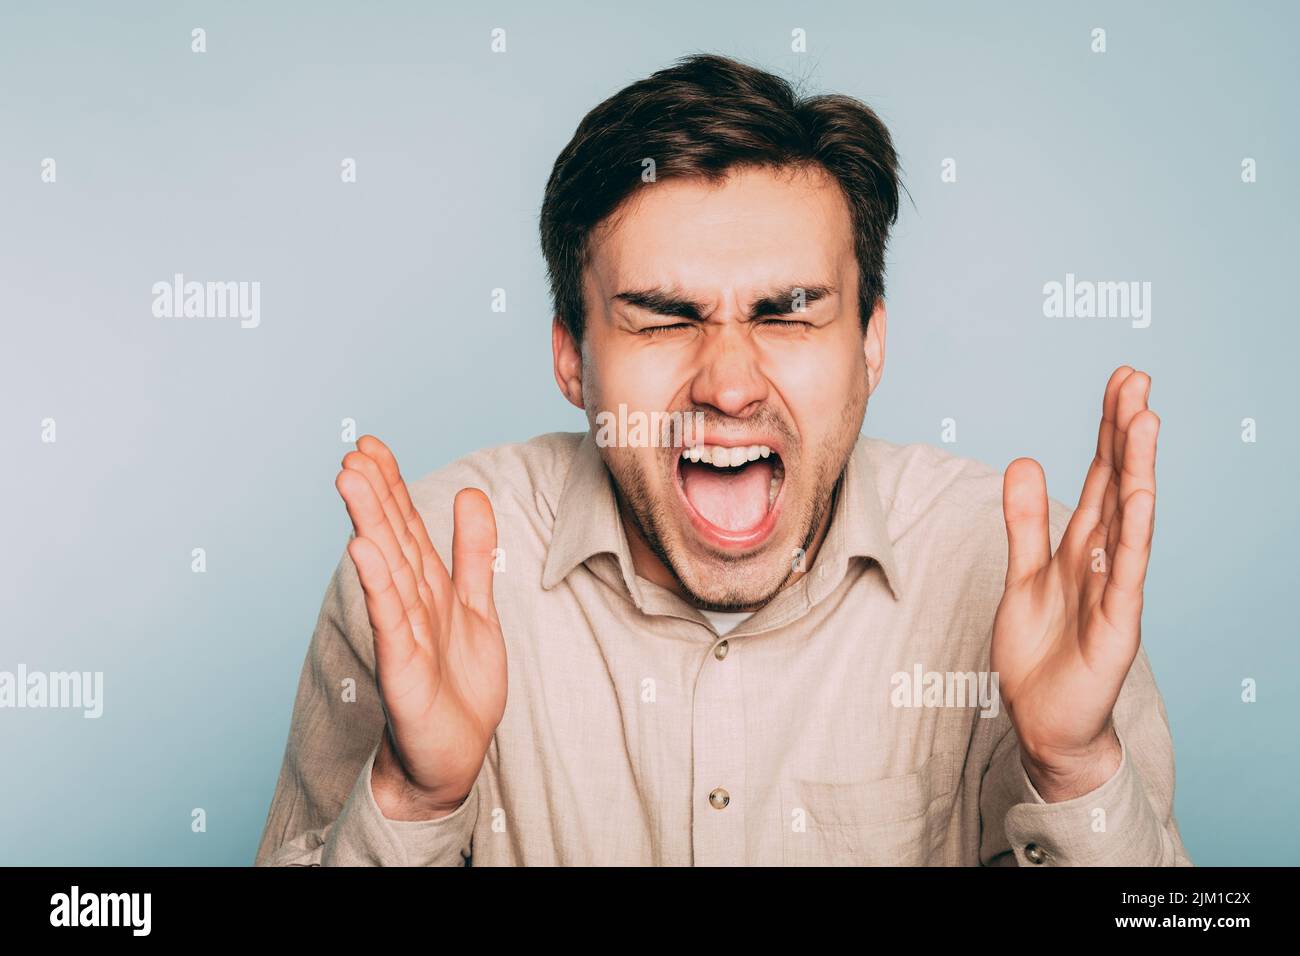 man screaming feelings overload fury emotion Stock Photo